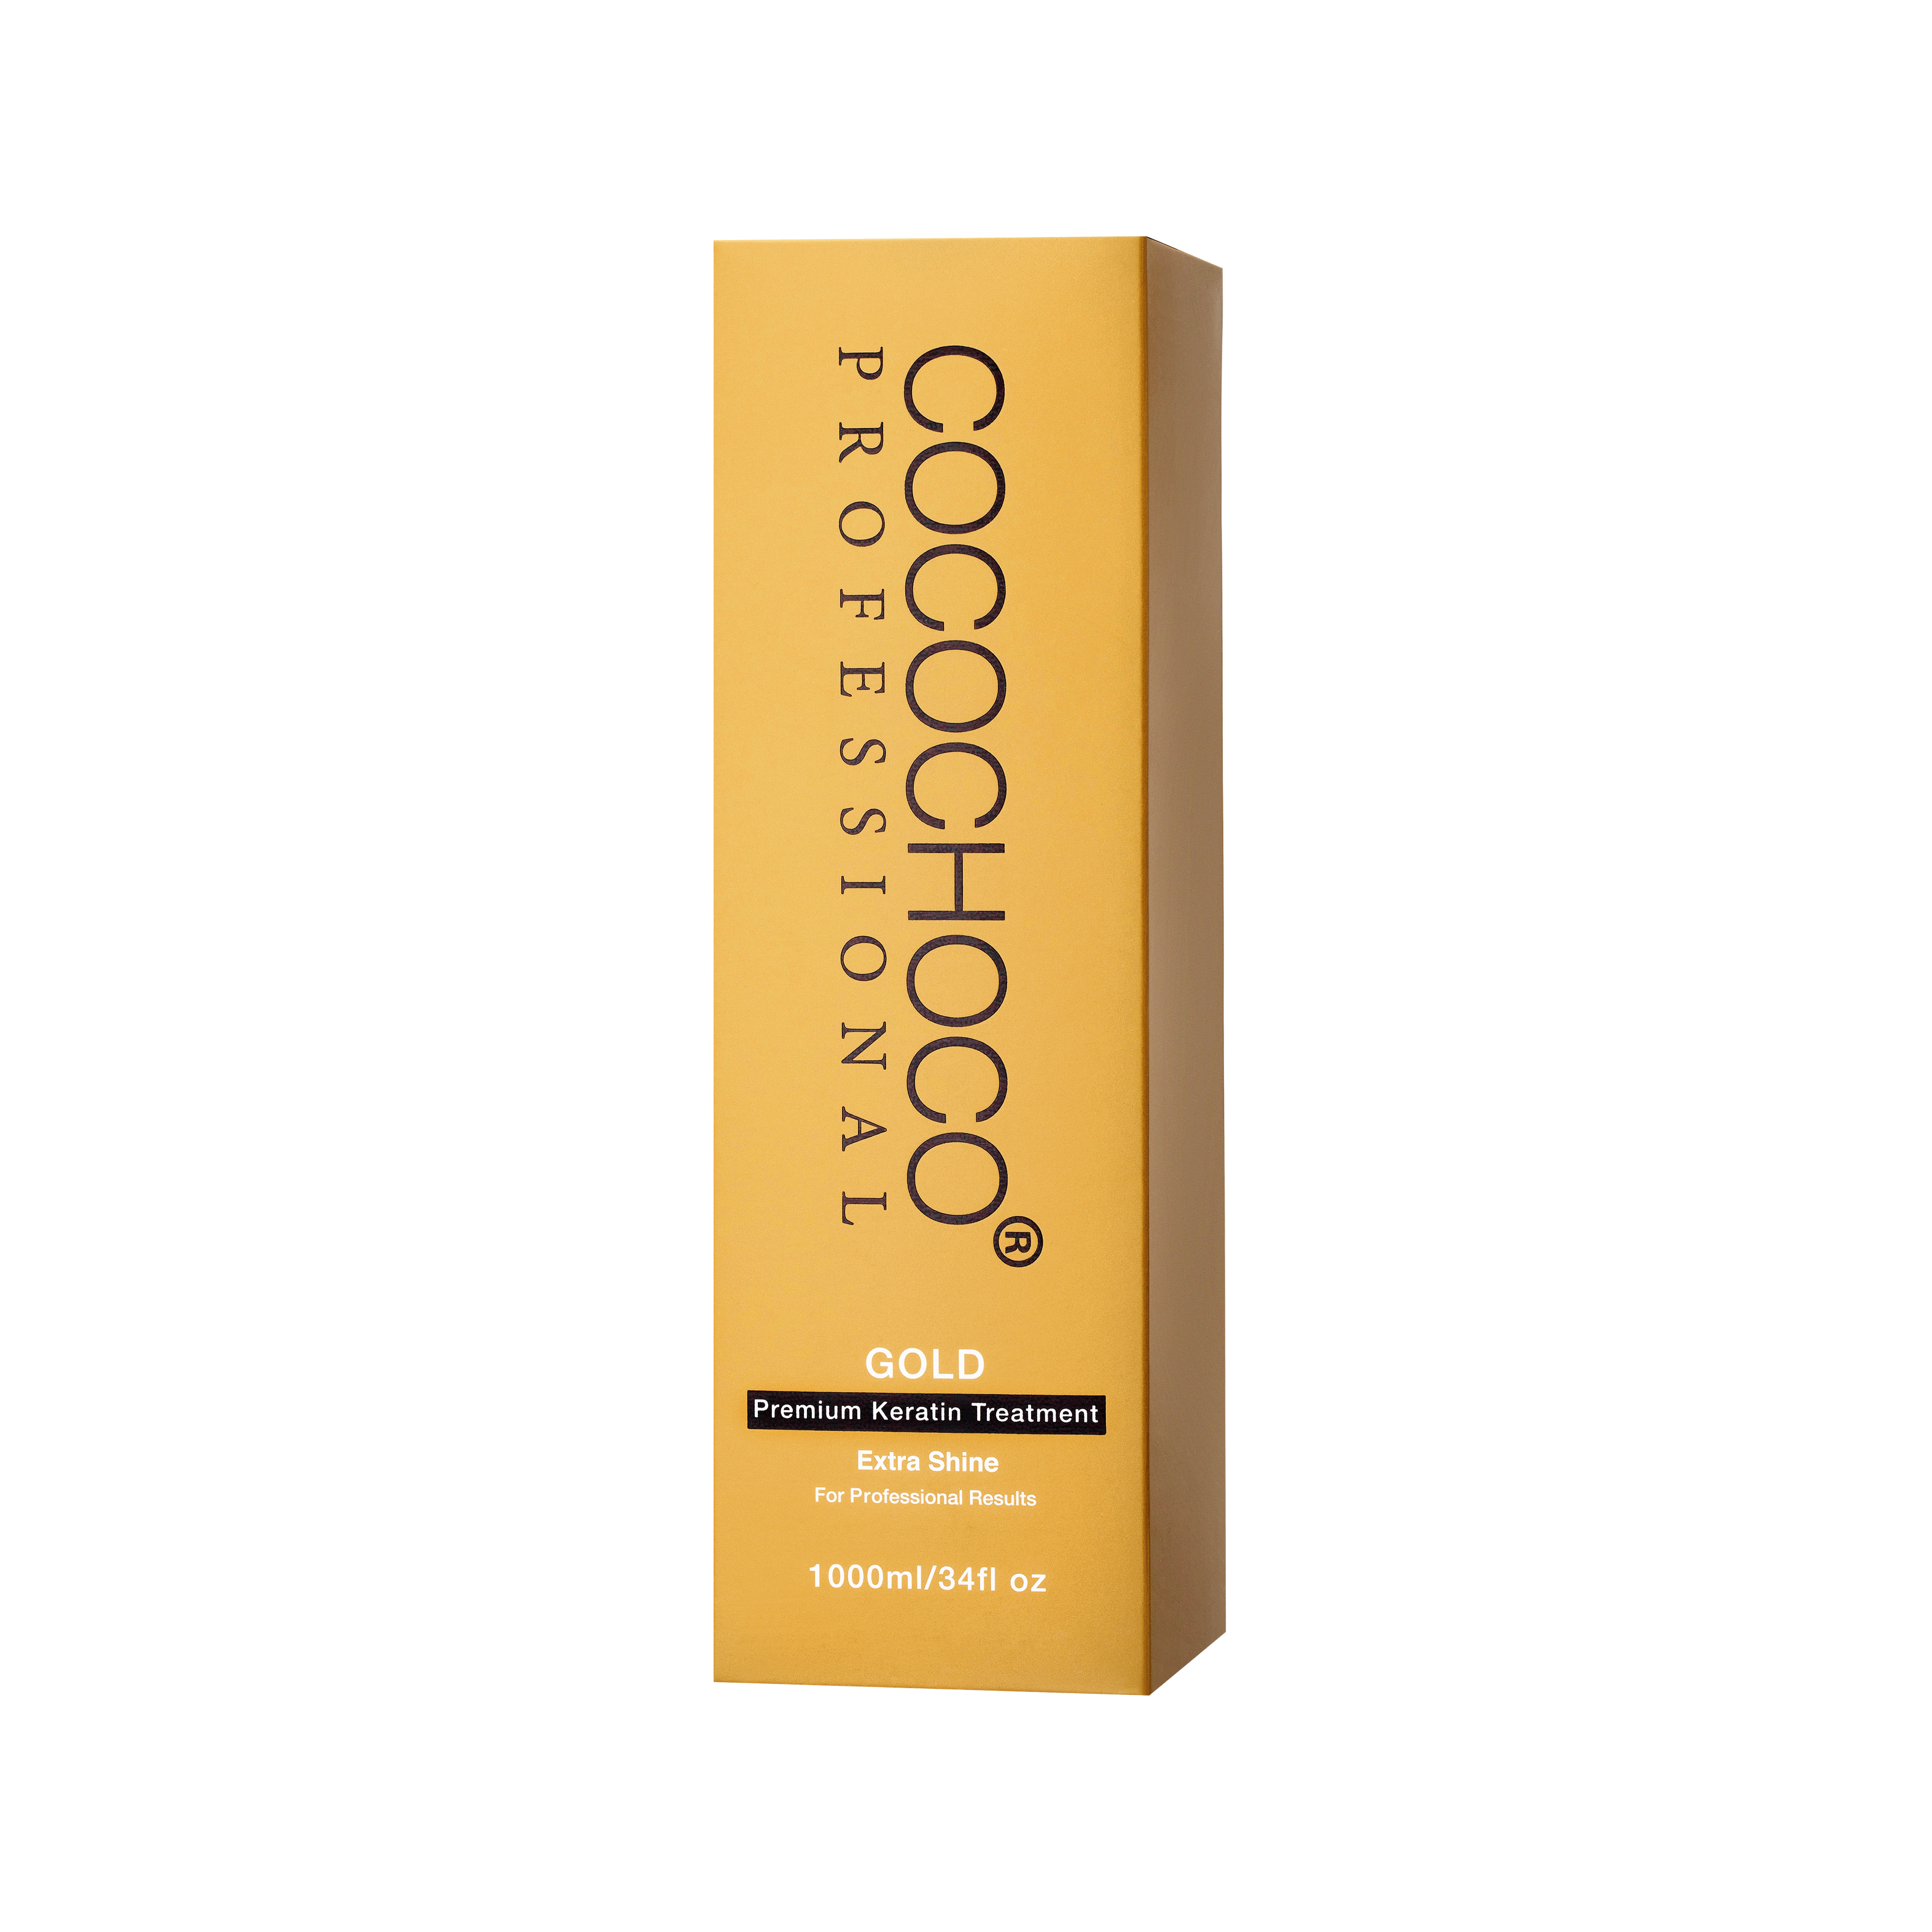 COCOCHOCO Gold keratin hair straightening treatment 34oz - with 24k liquid gold